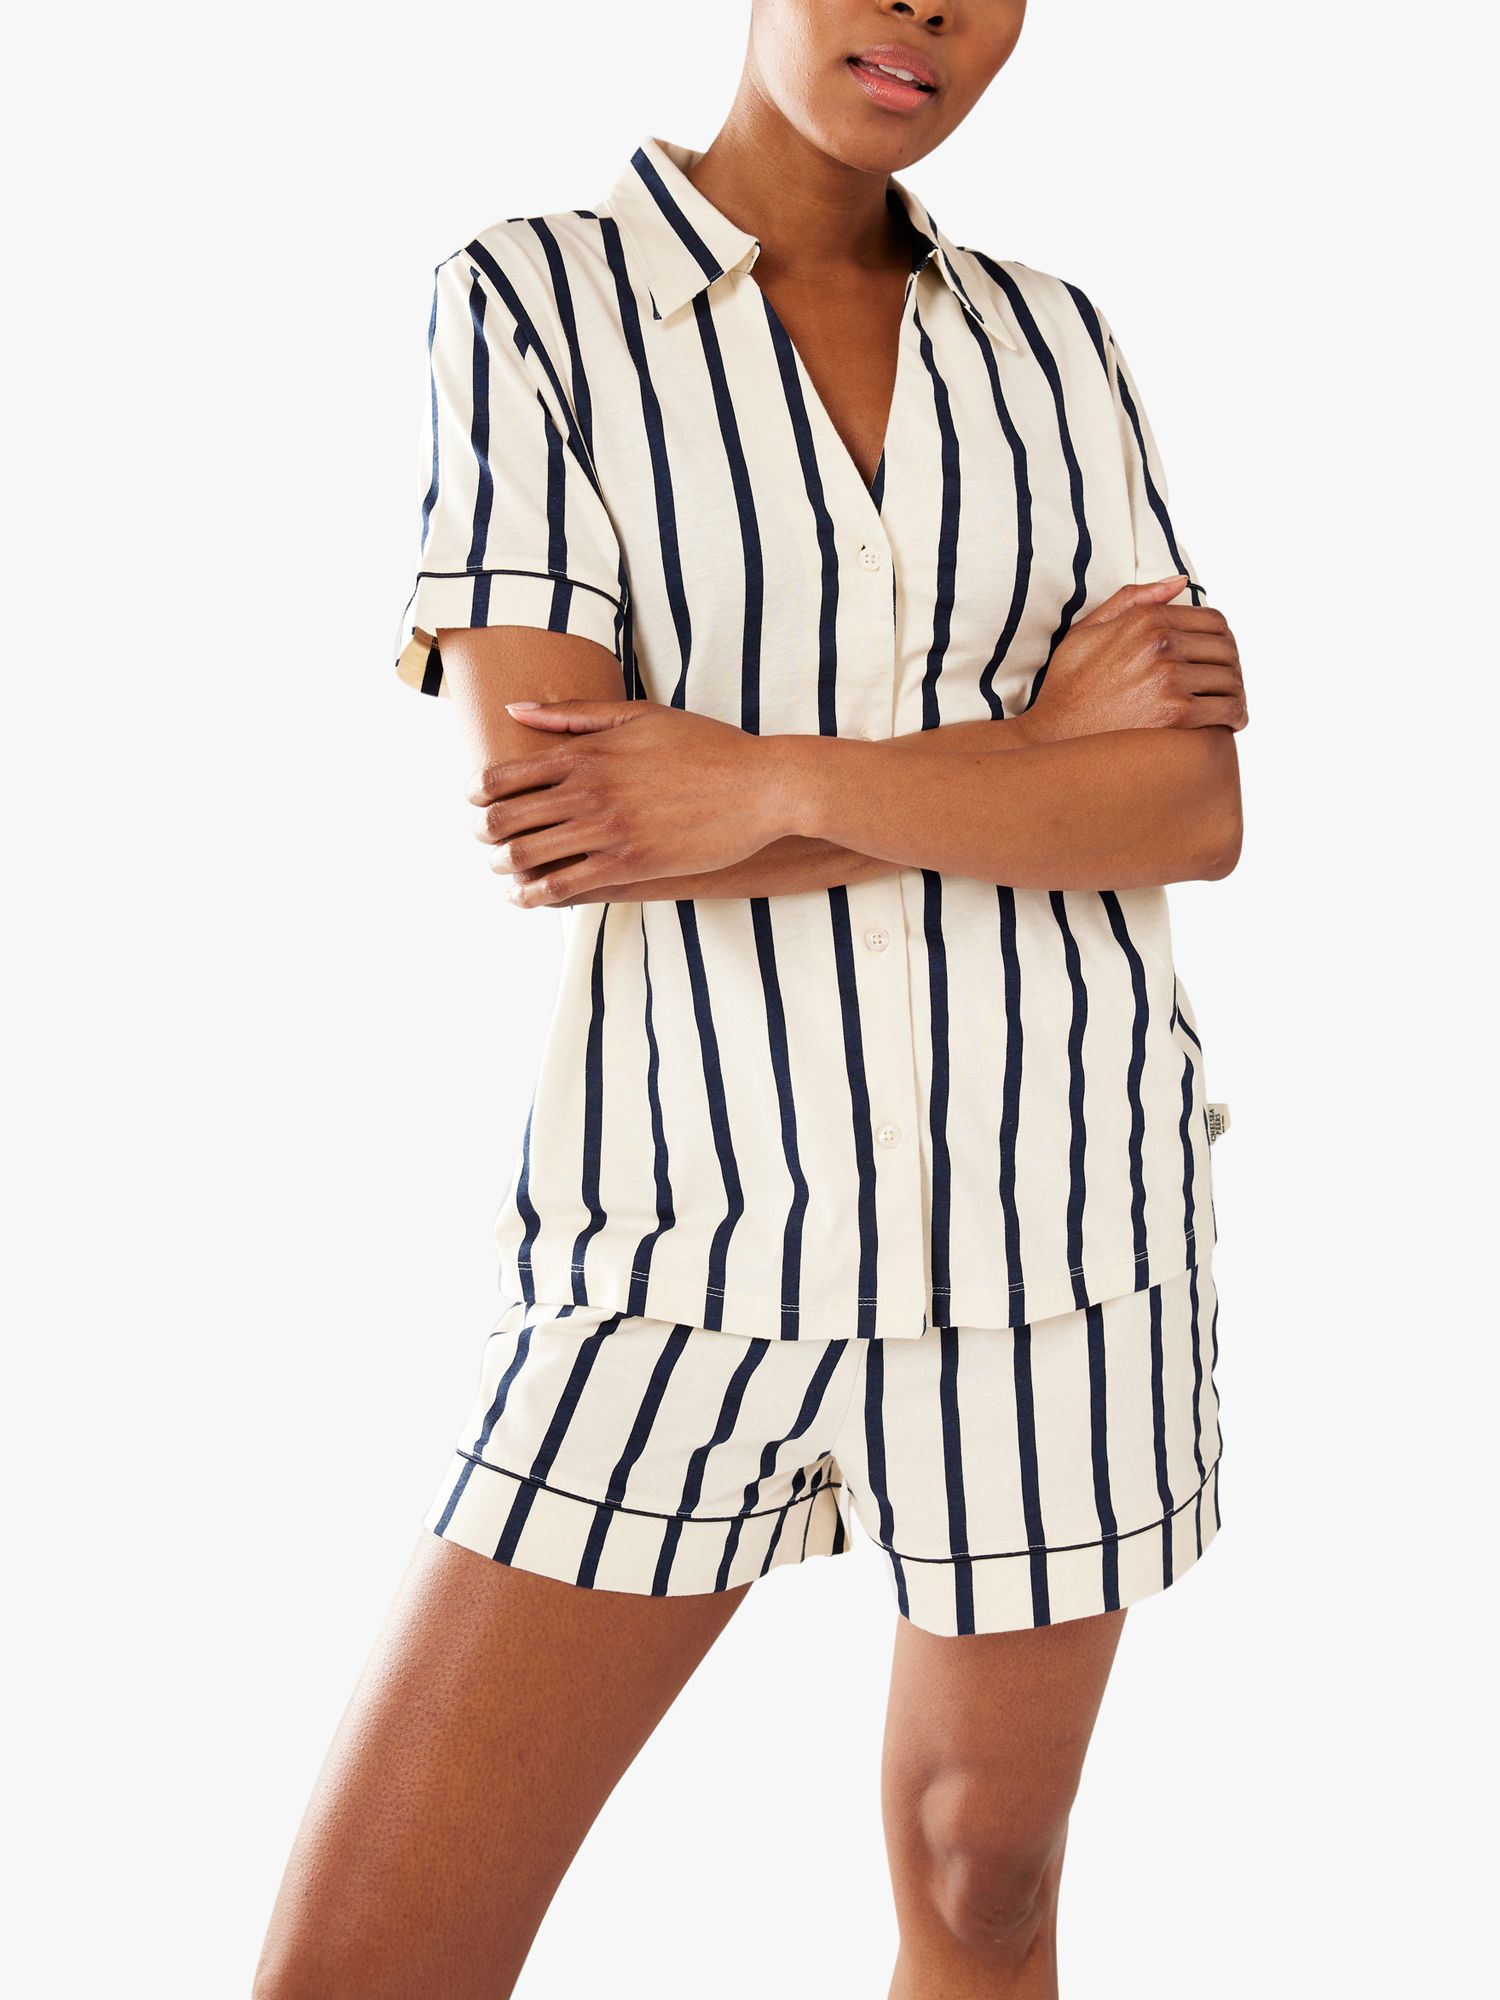 Chelsea Peers Organic Cotton Striped Pyjamas, Navy/White, 6